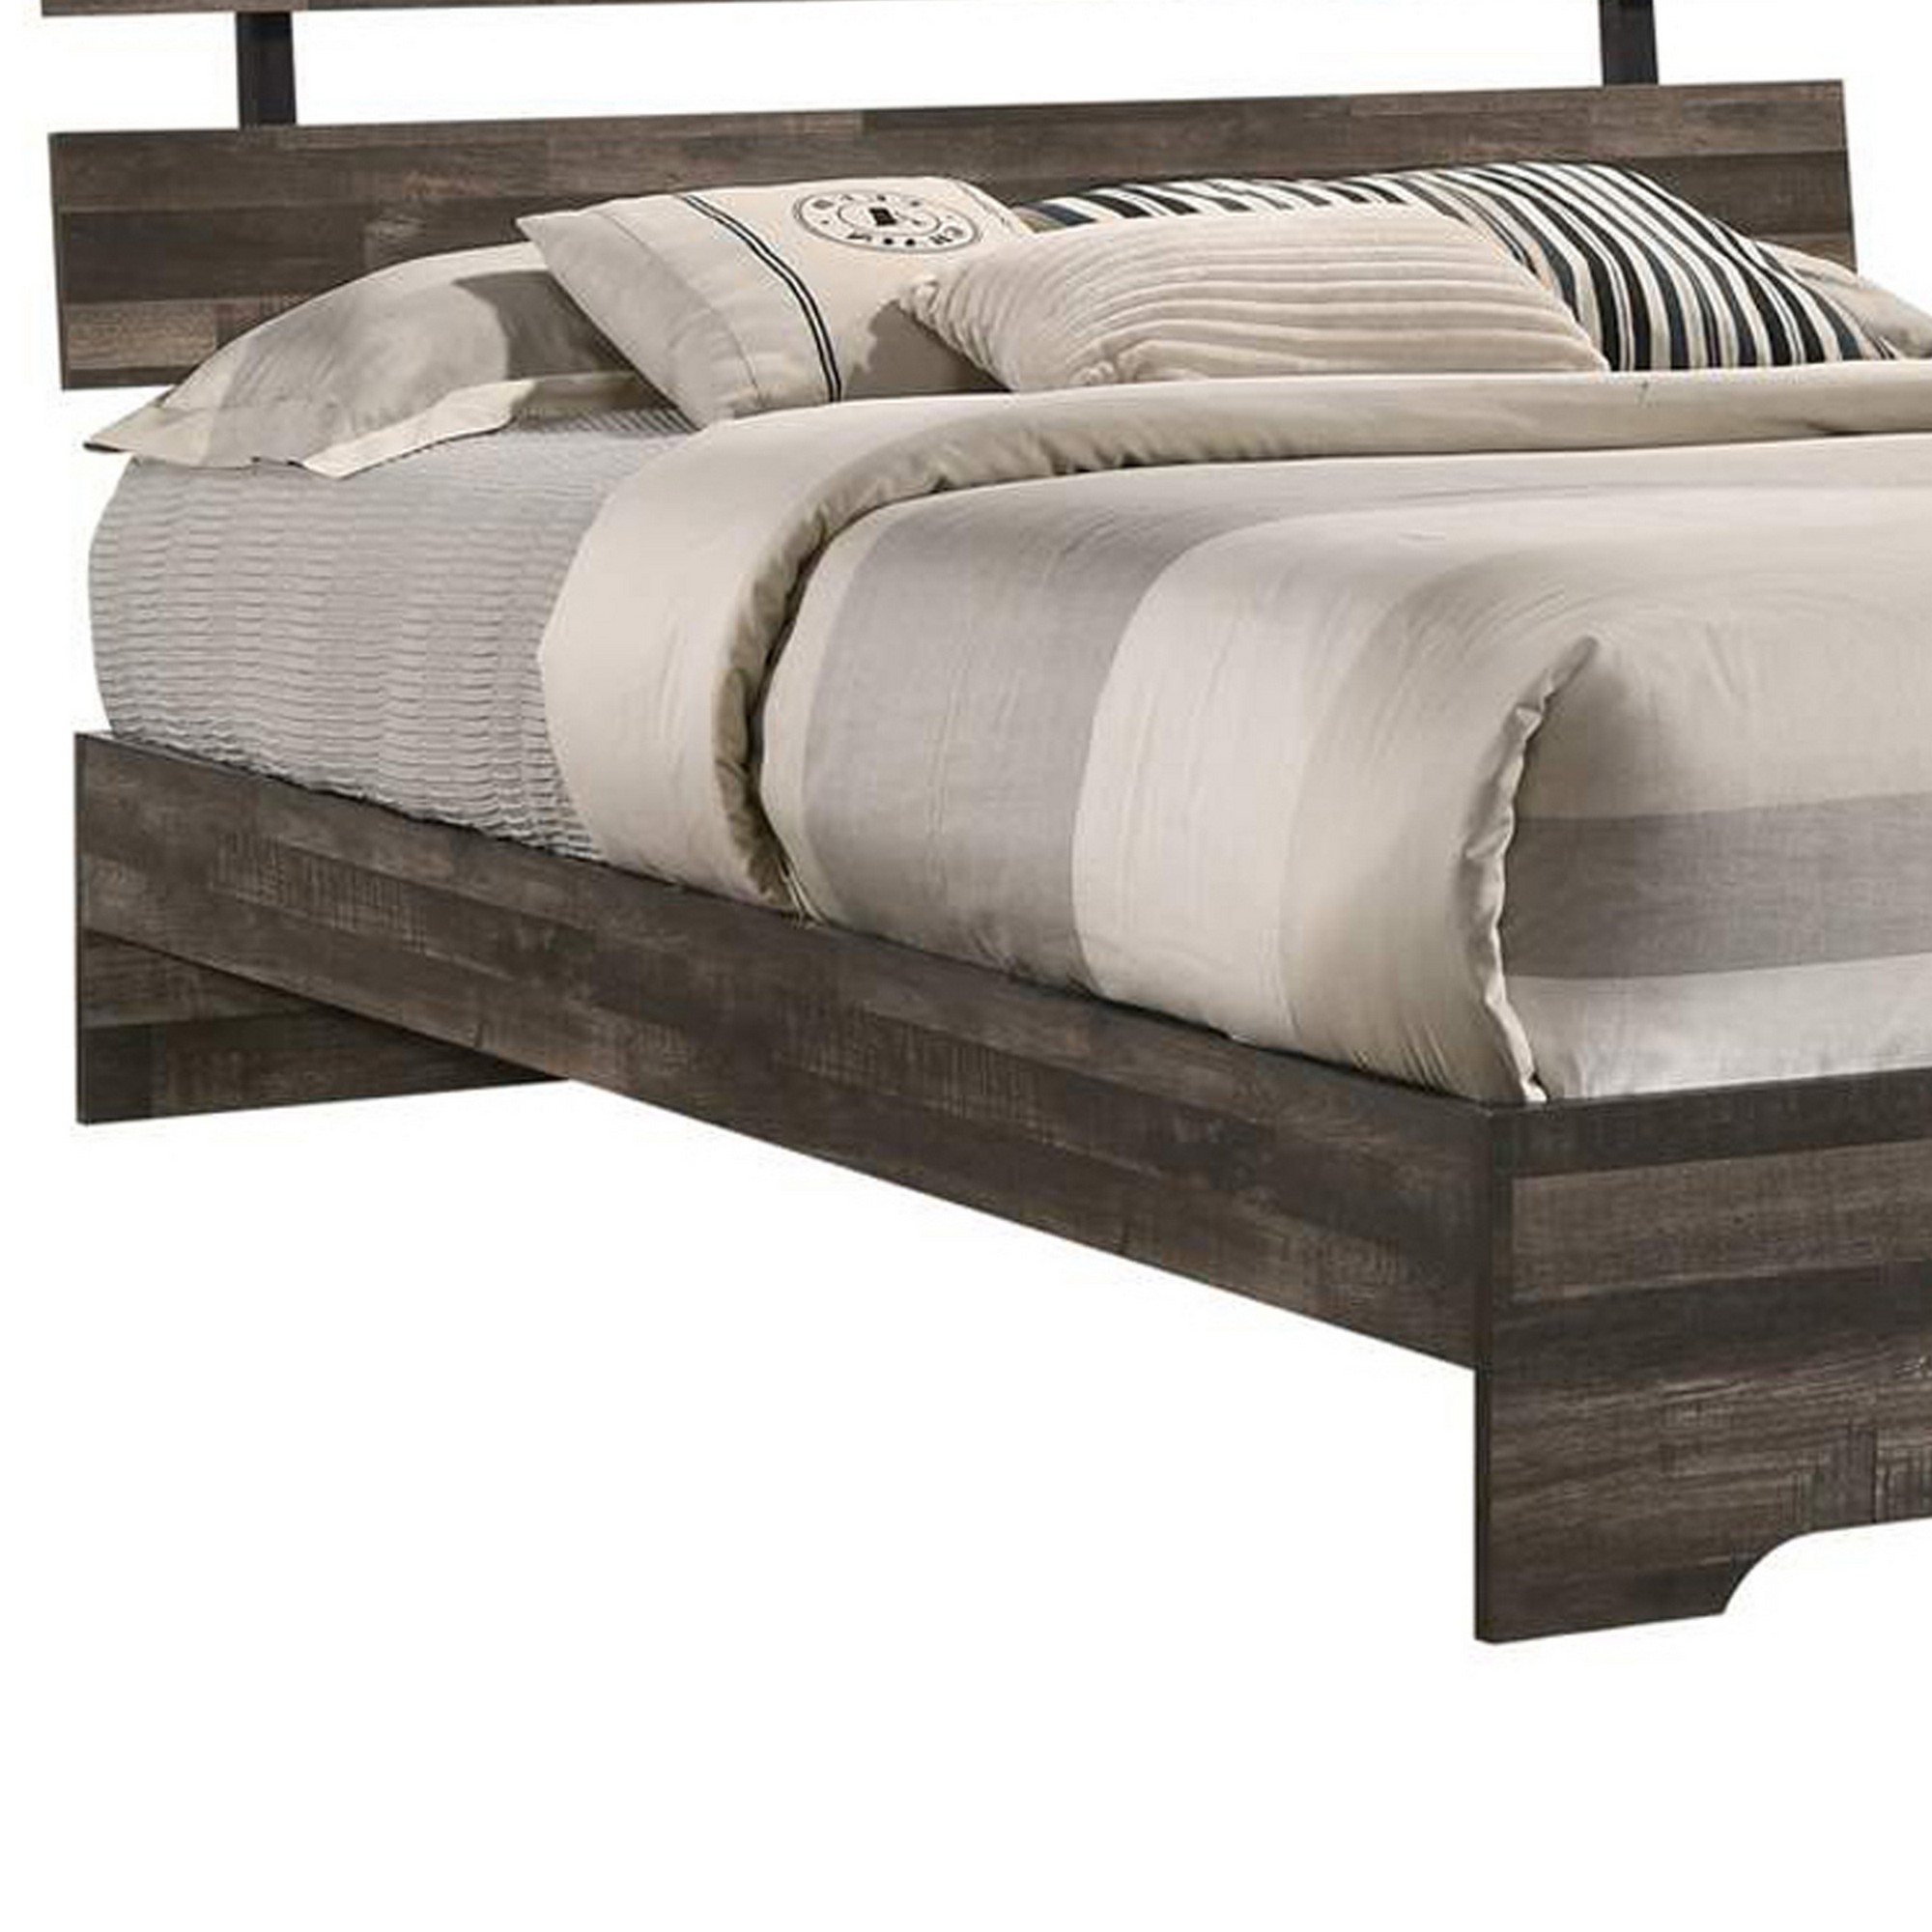 Queen Bed With Rustic Heavy Grain Details And Panel Design, Brown- Saltoro Sherpi